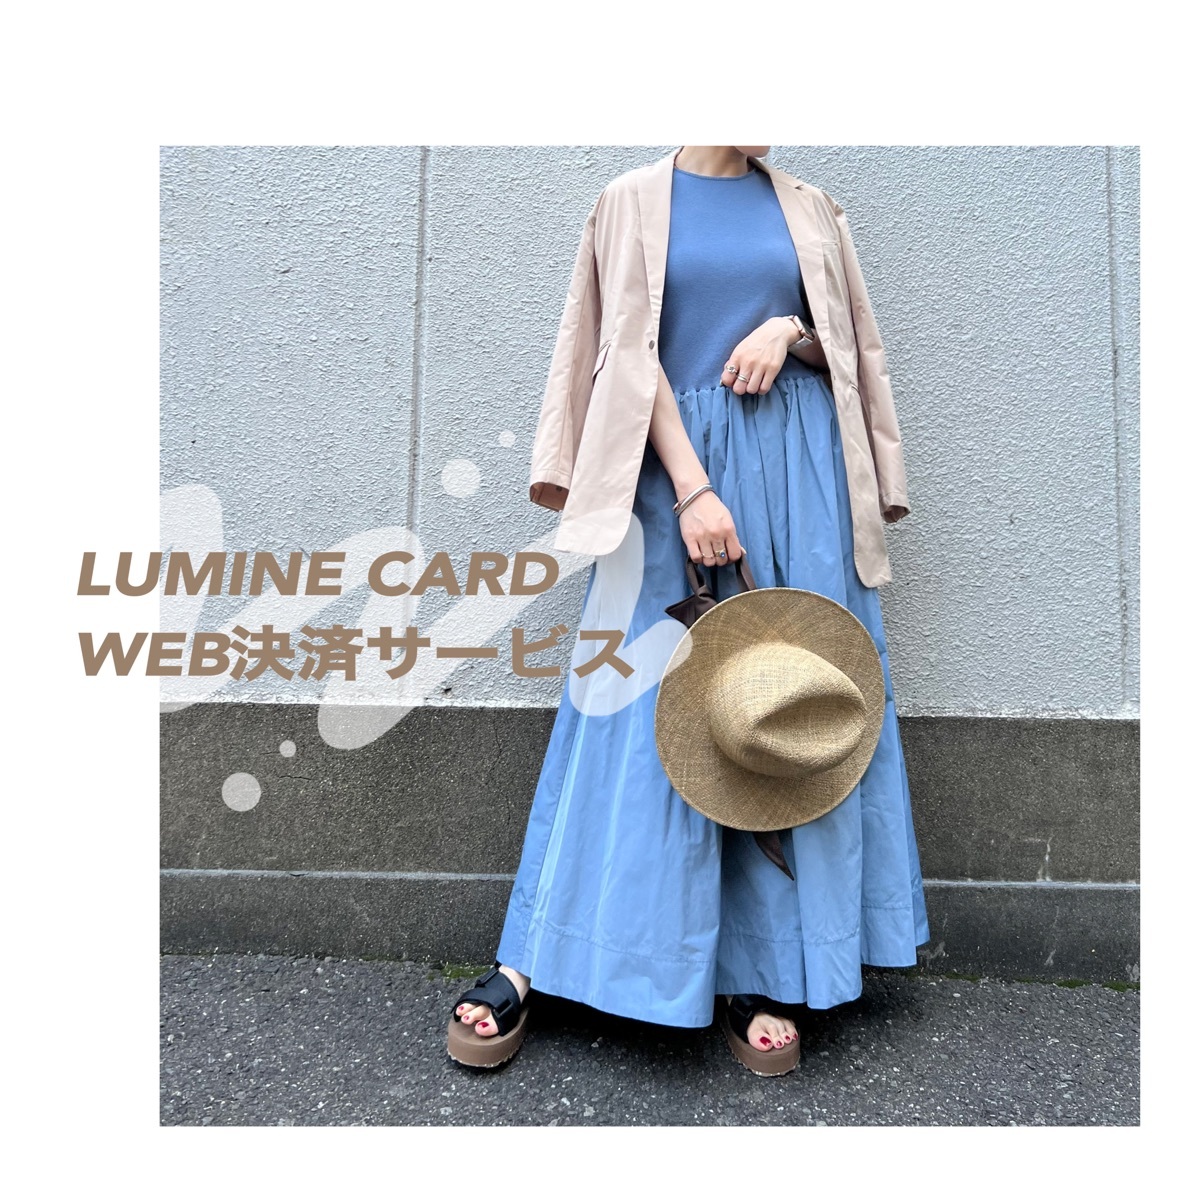 LUMINE CARD web決済サービス